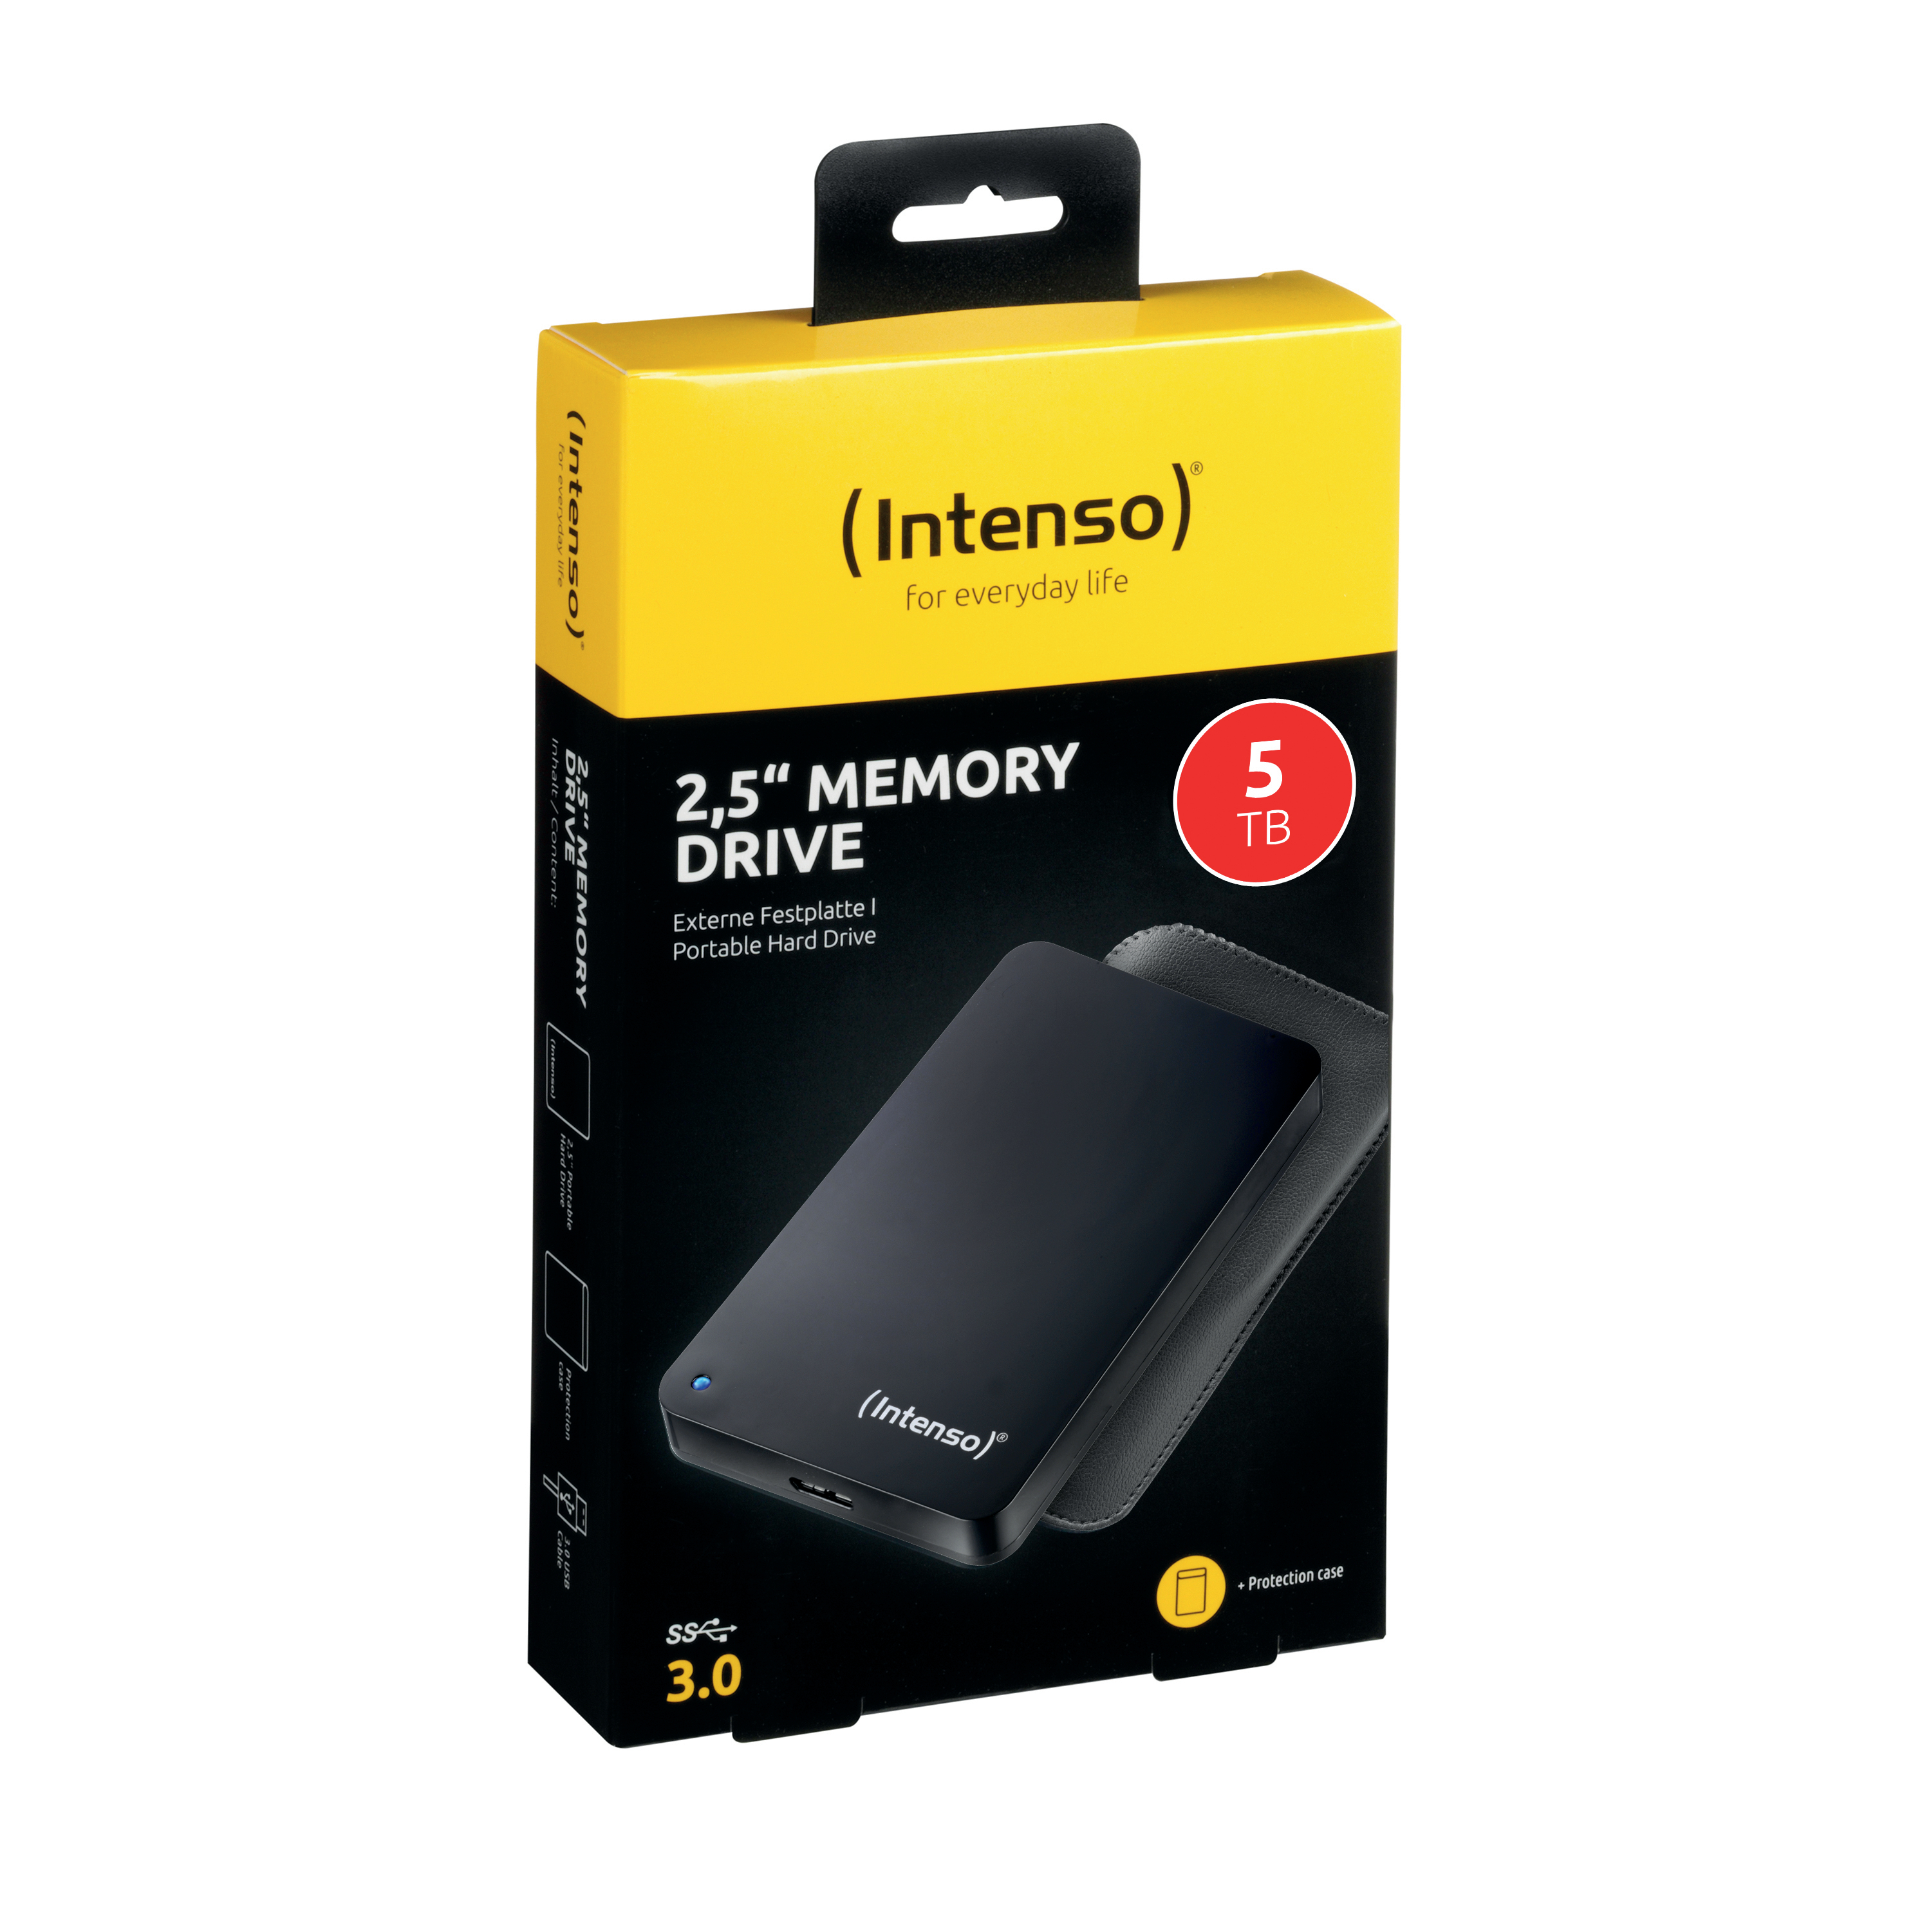 2,5 extern, MEMORY INTENSO DRIVE TB 5 Schwarz Zoll, Festplatte, HDD,